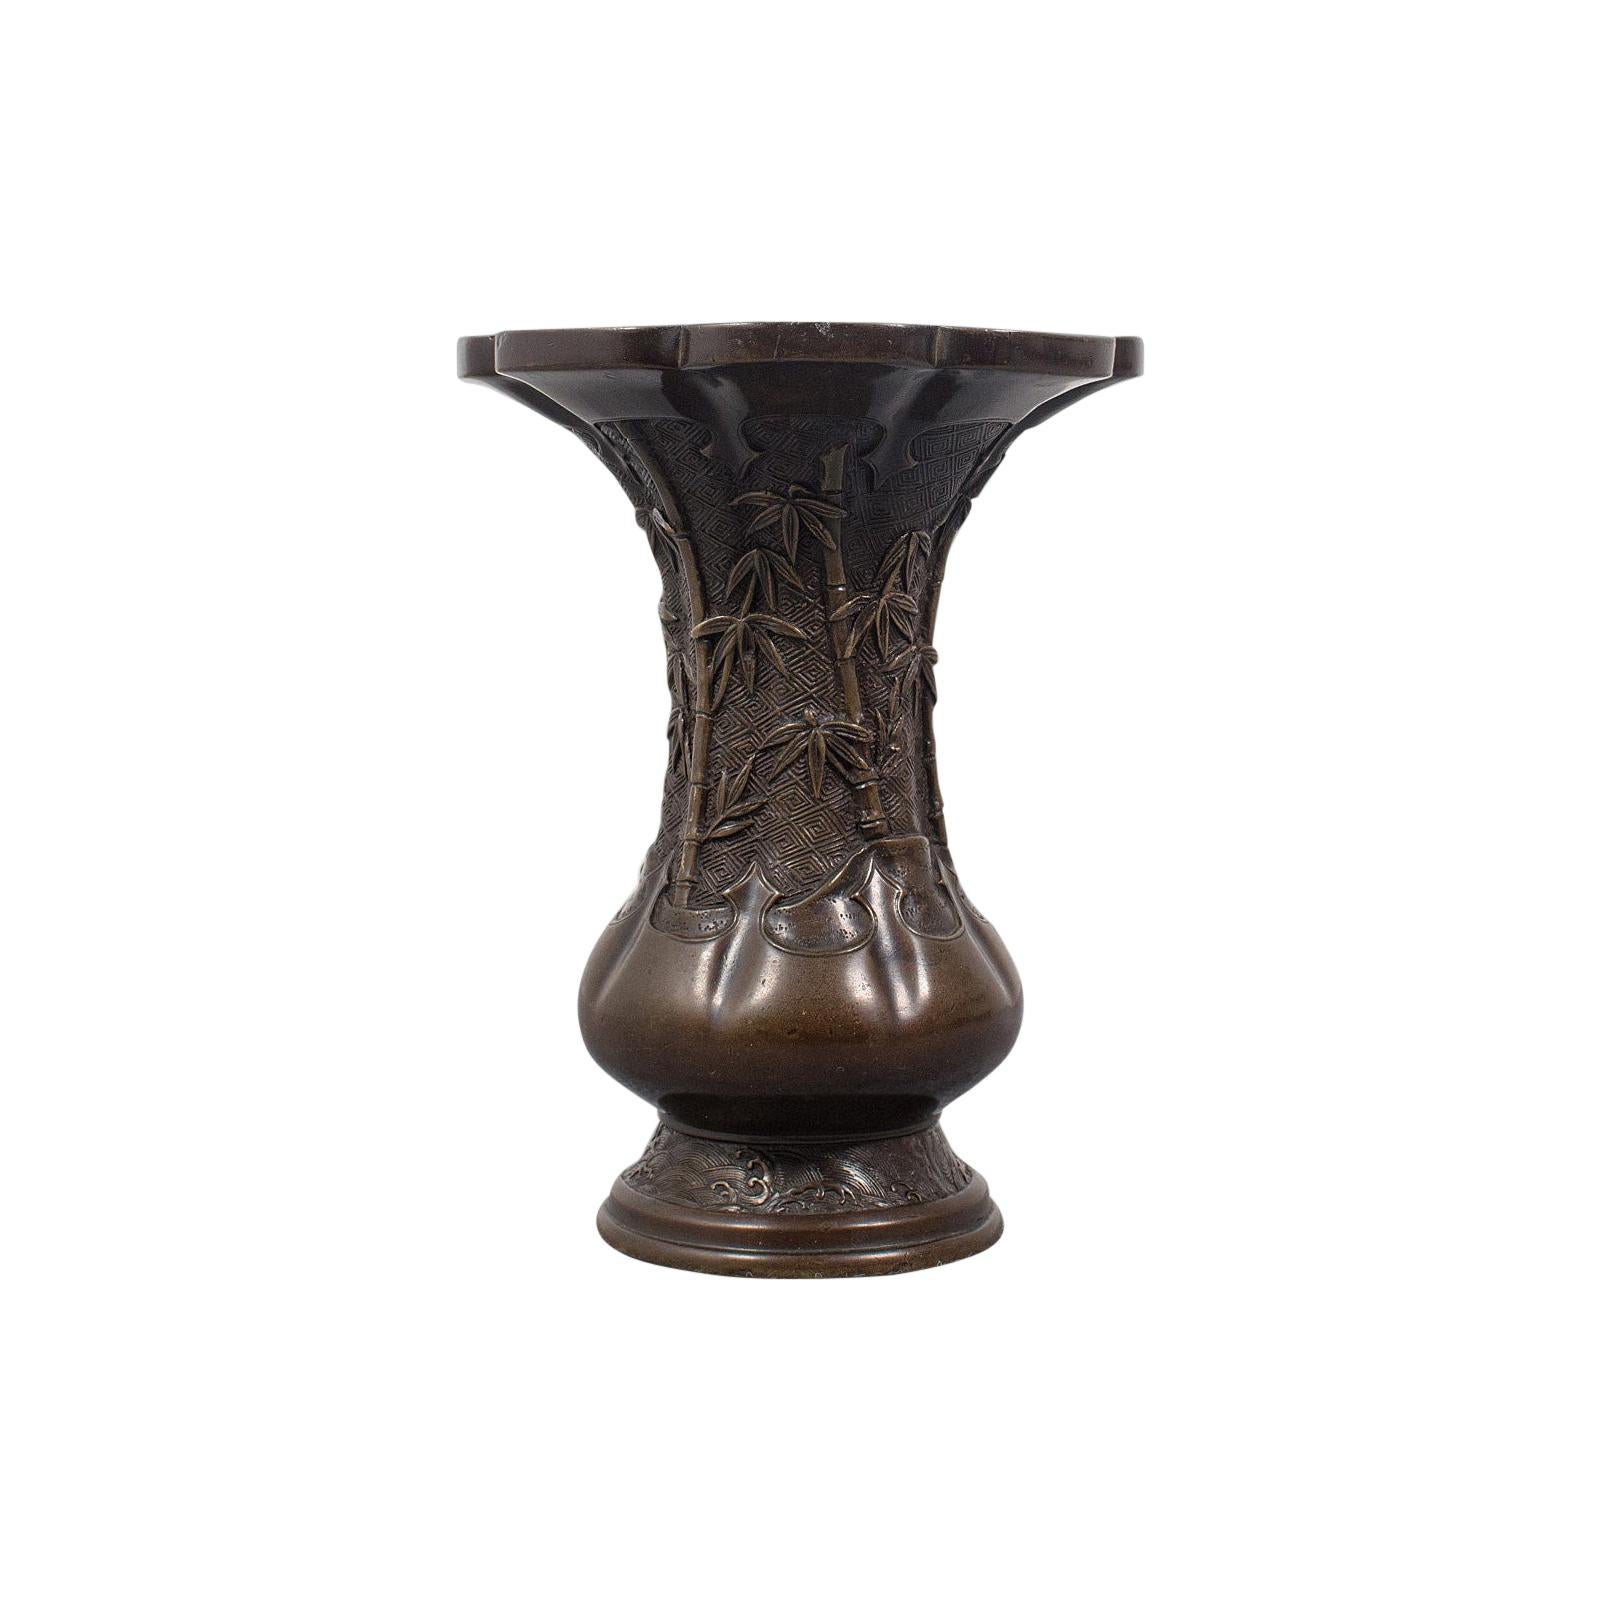 Vase oriental ancien chinois, bronze, urne balustre décorative, victorien, 1900